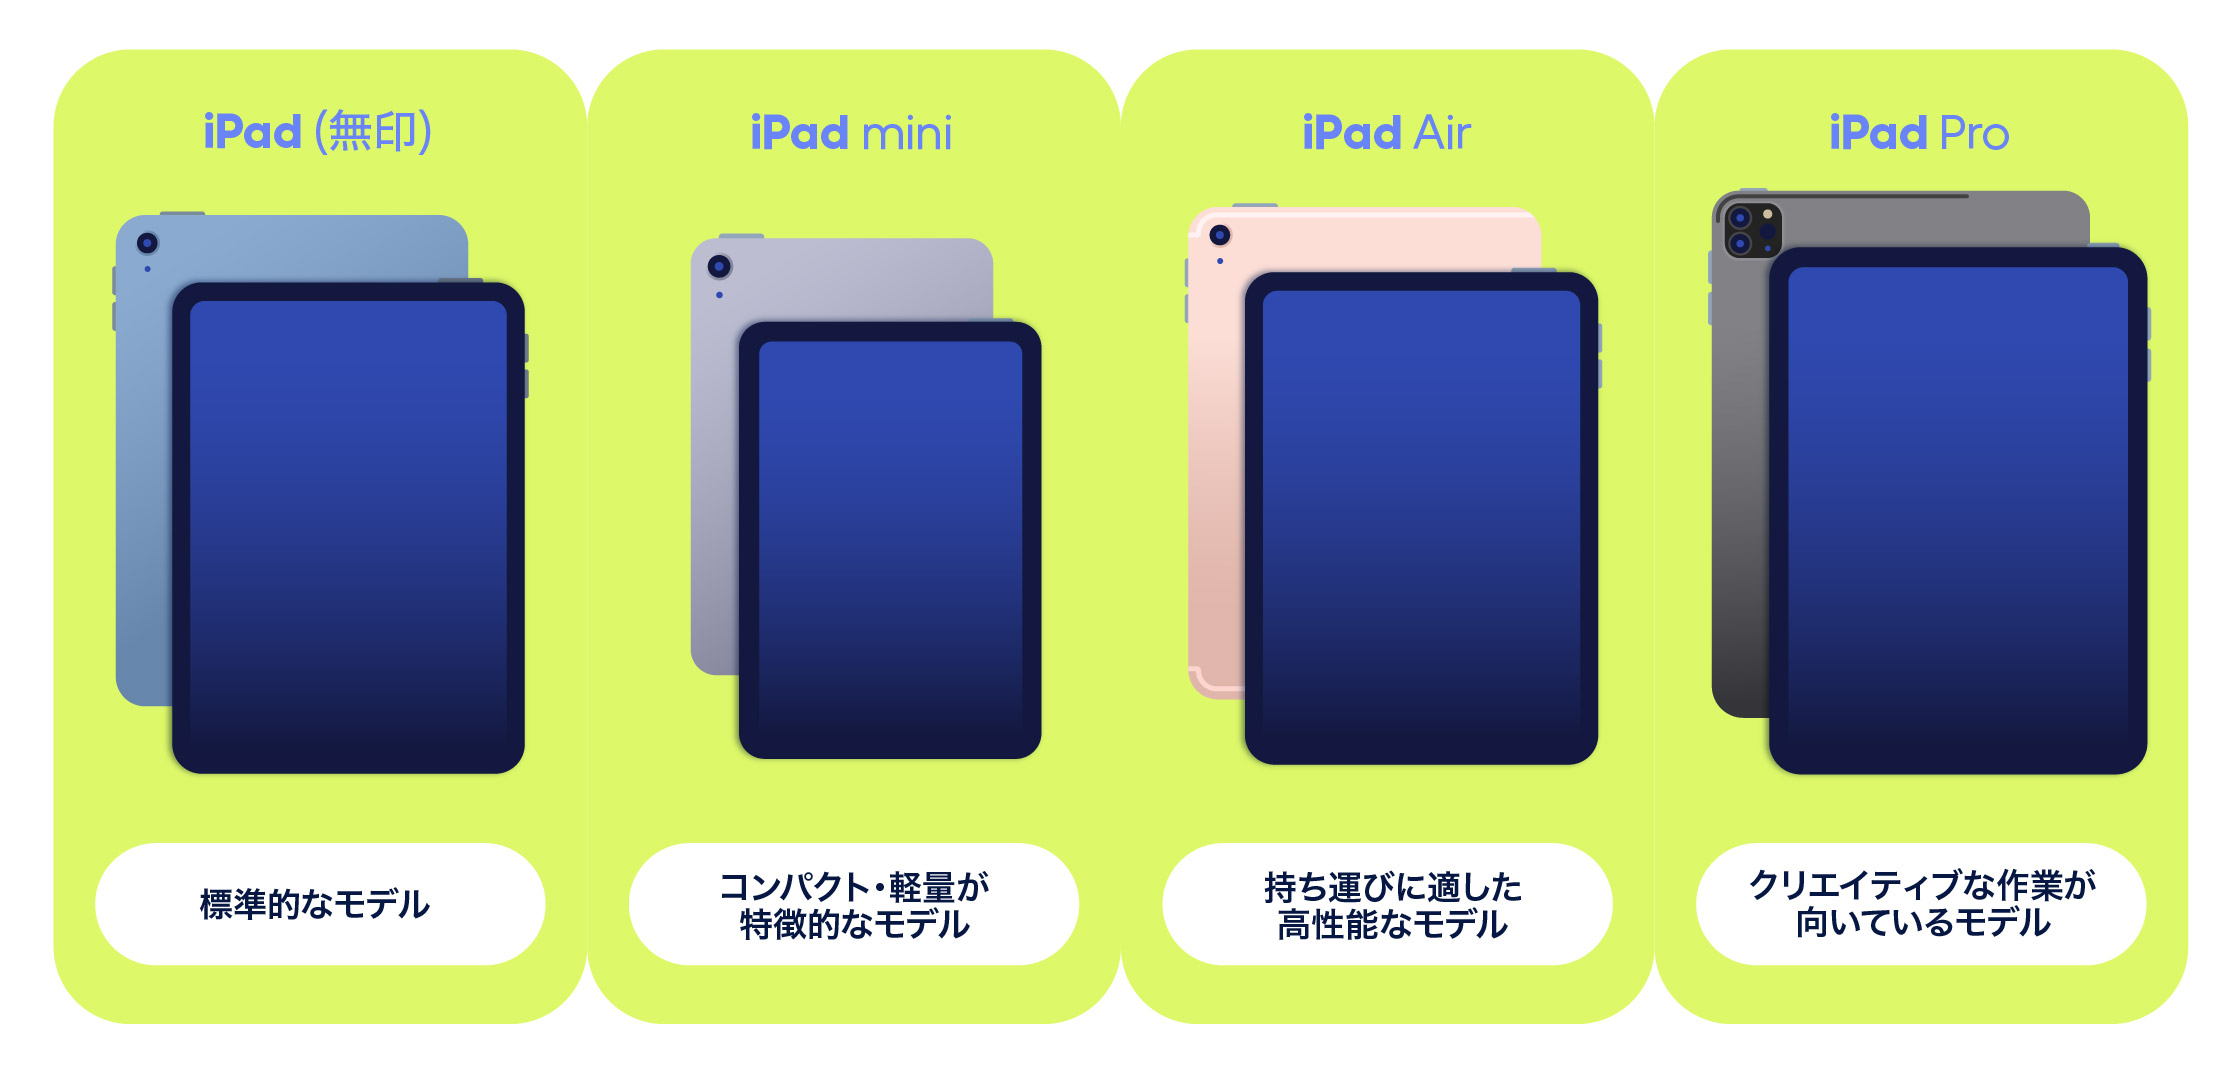 iPad 4つのモデルを比較